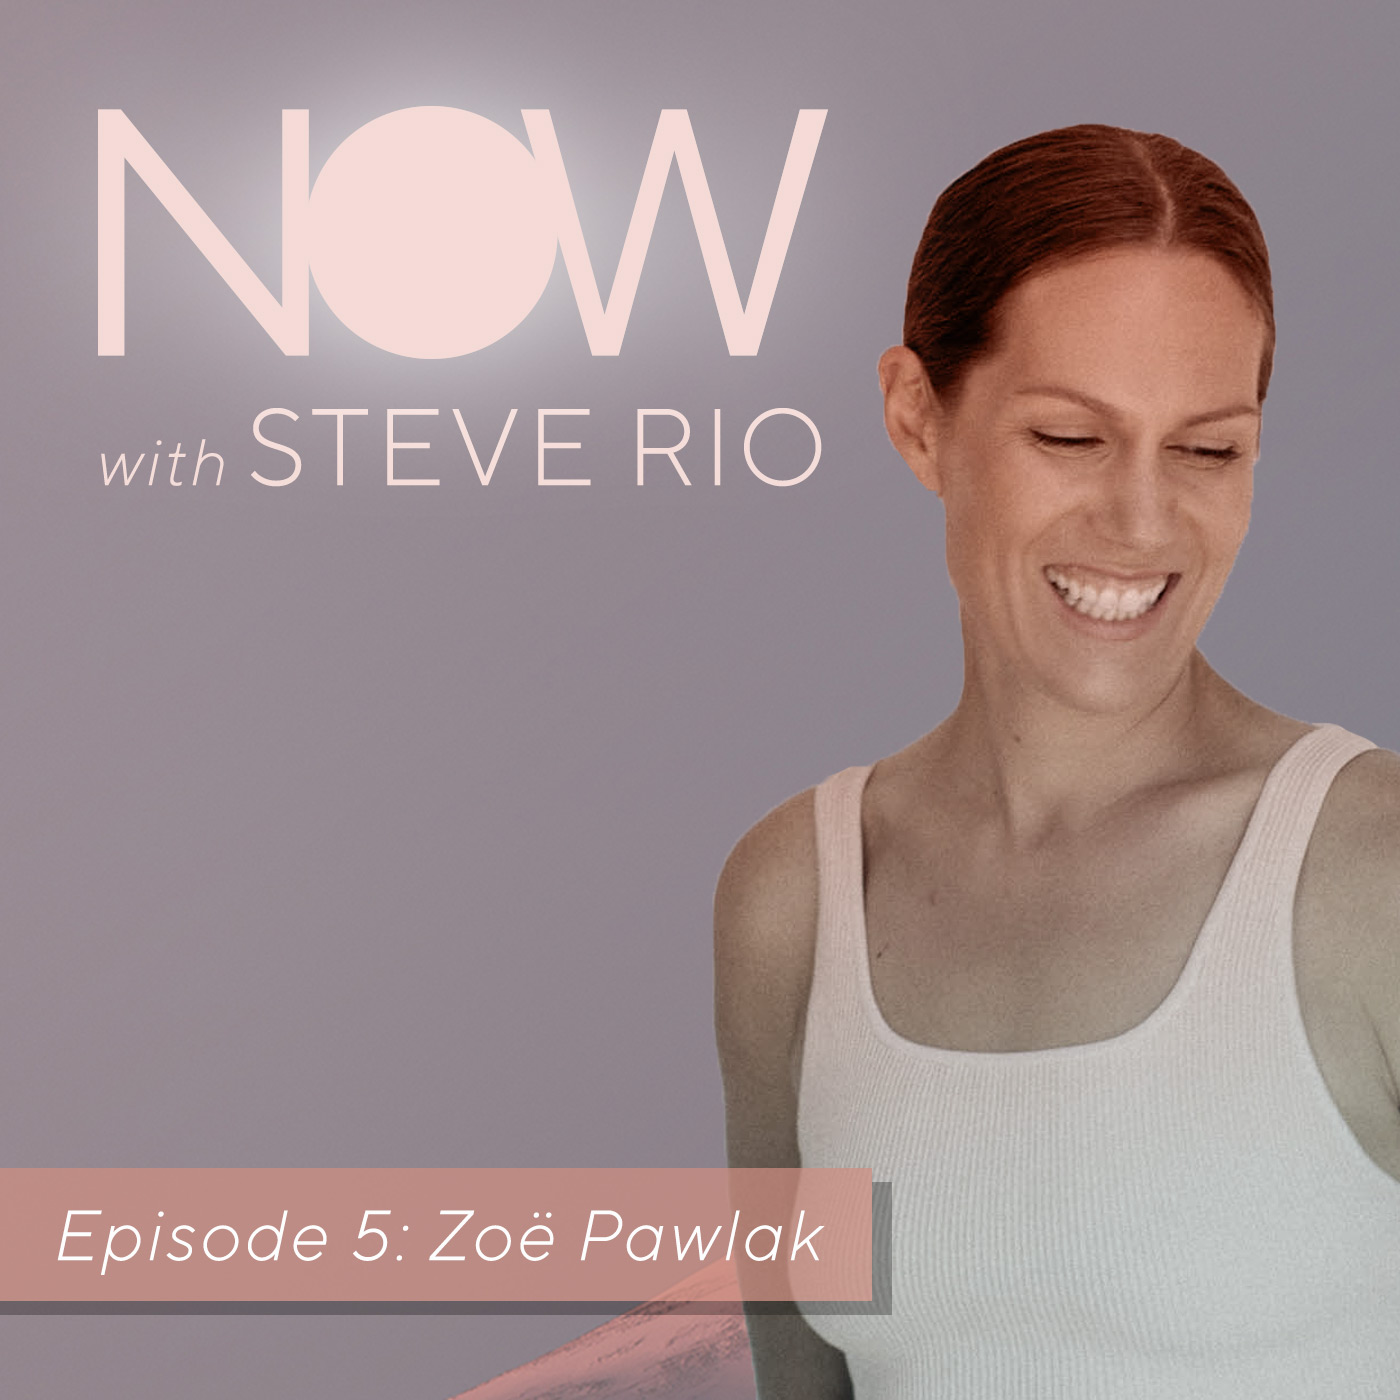 Zoe Pawlak on NOW with Steve Rio